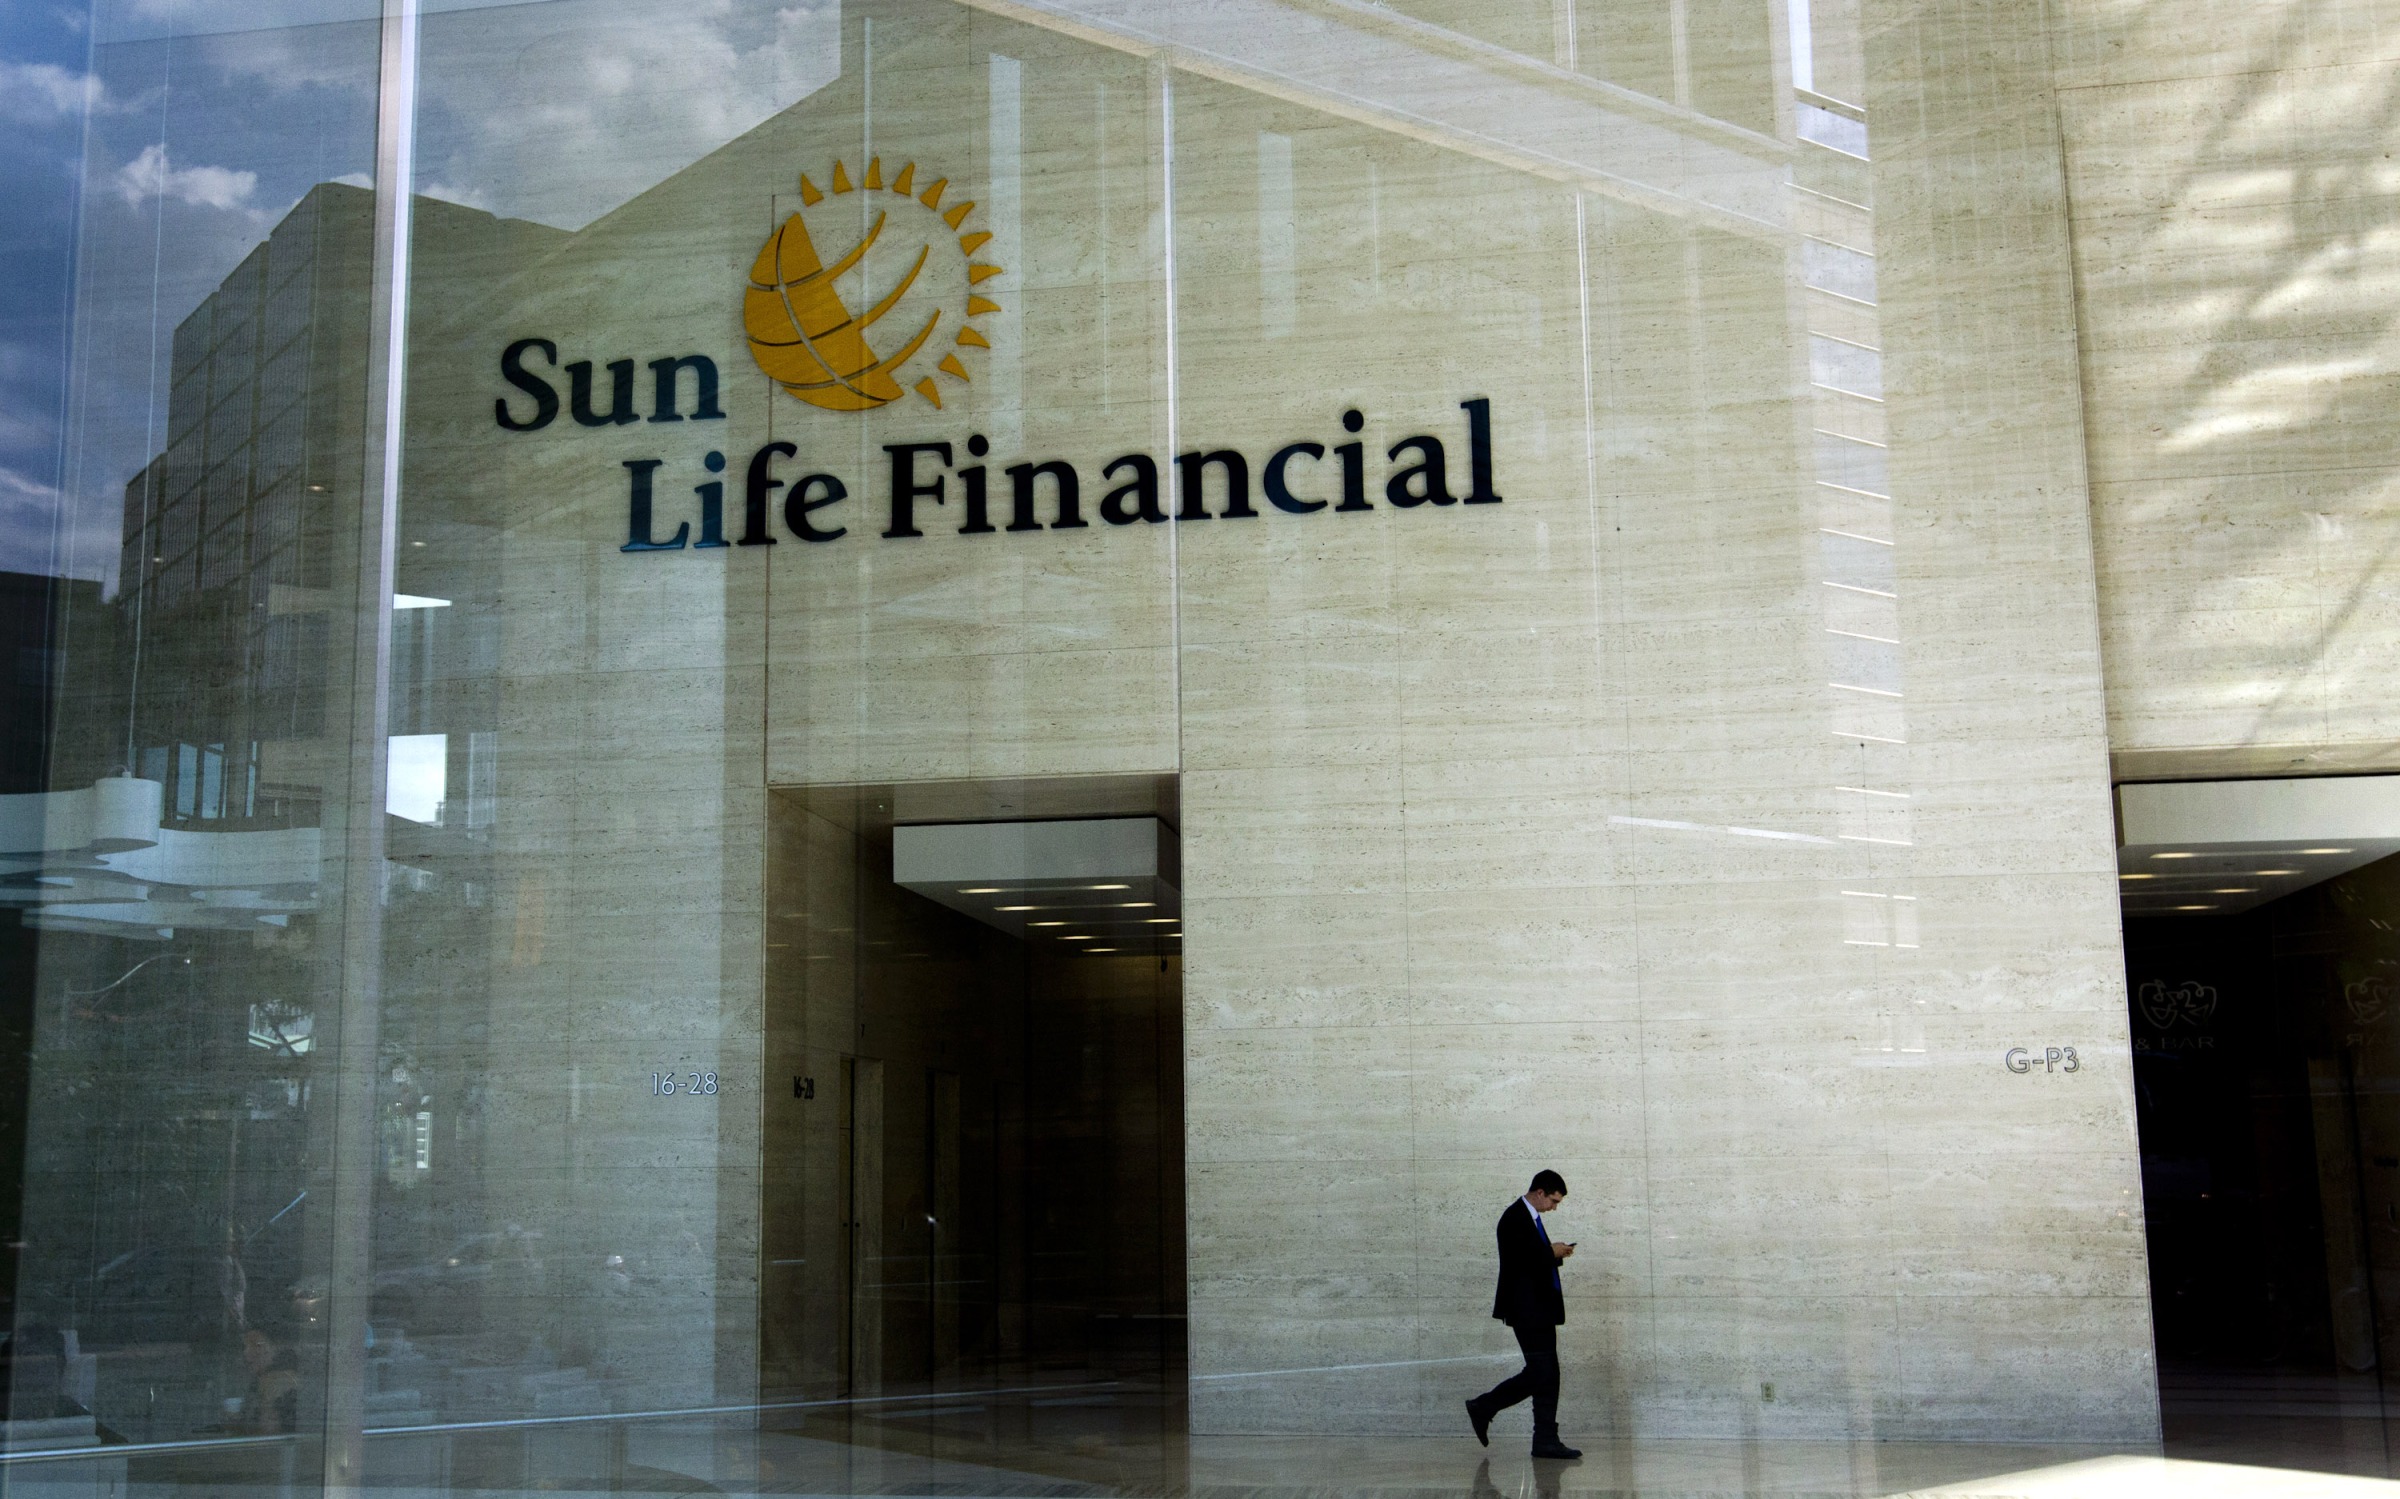 Sun is life. Sun Life Financial. Sun Life.